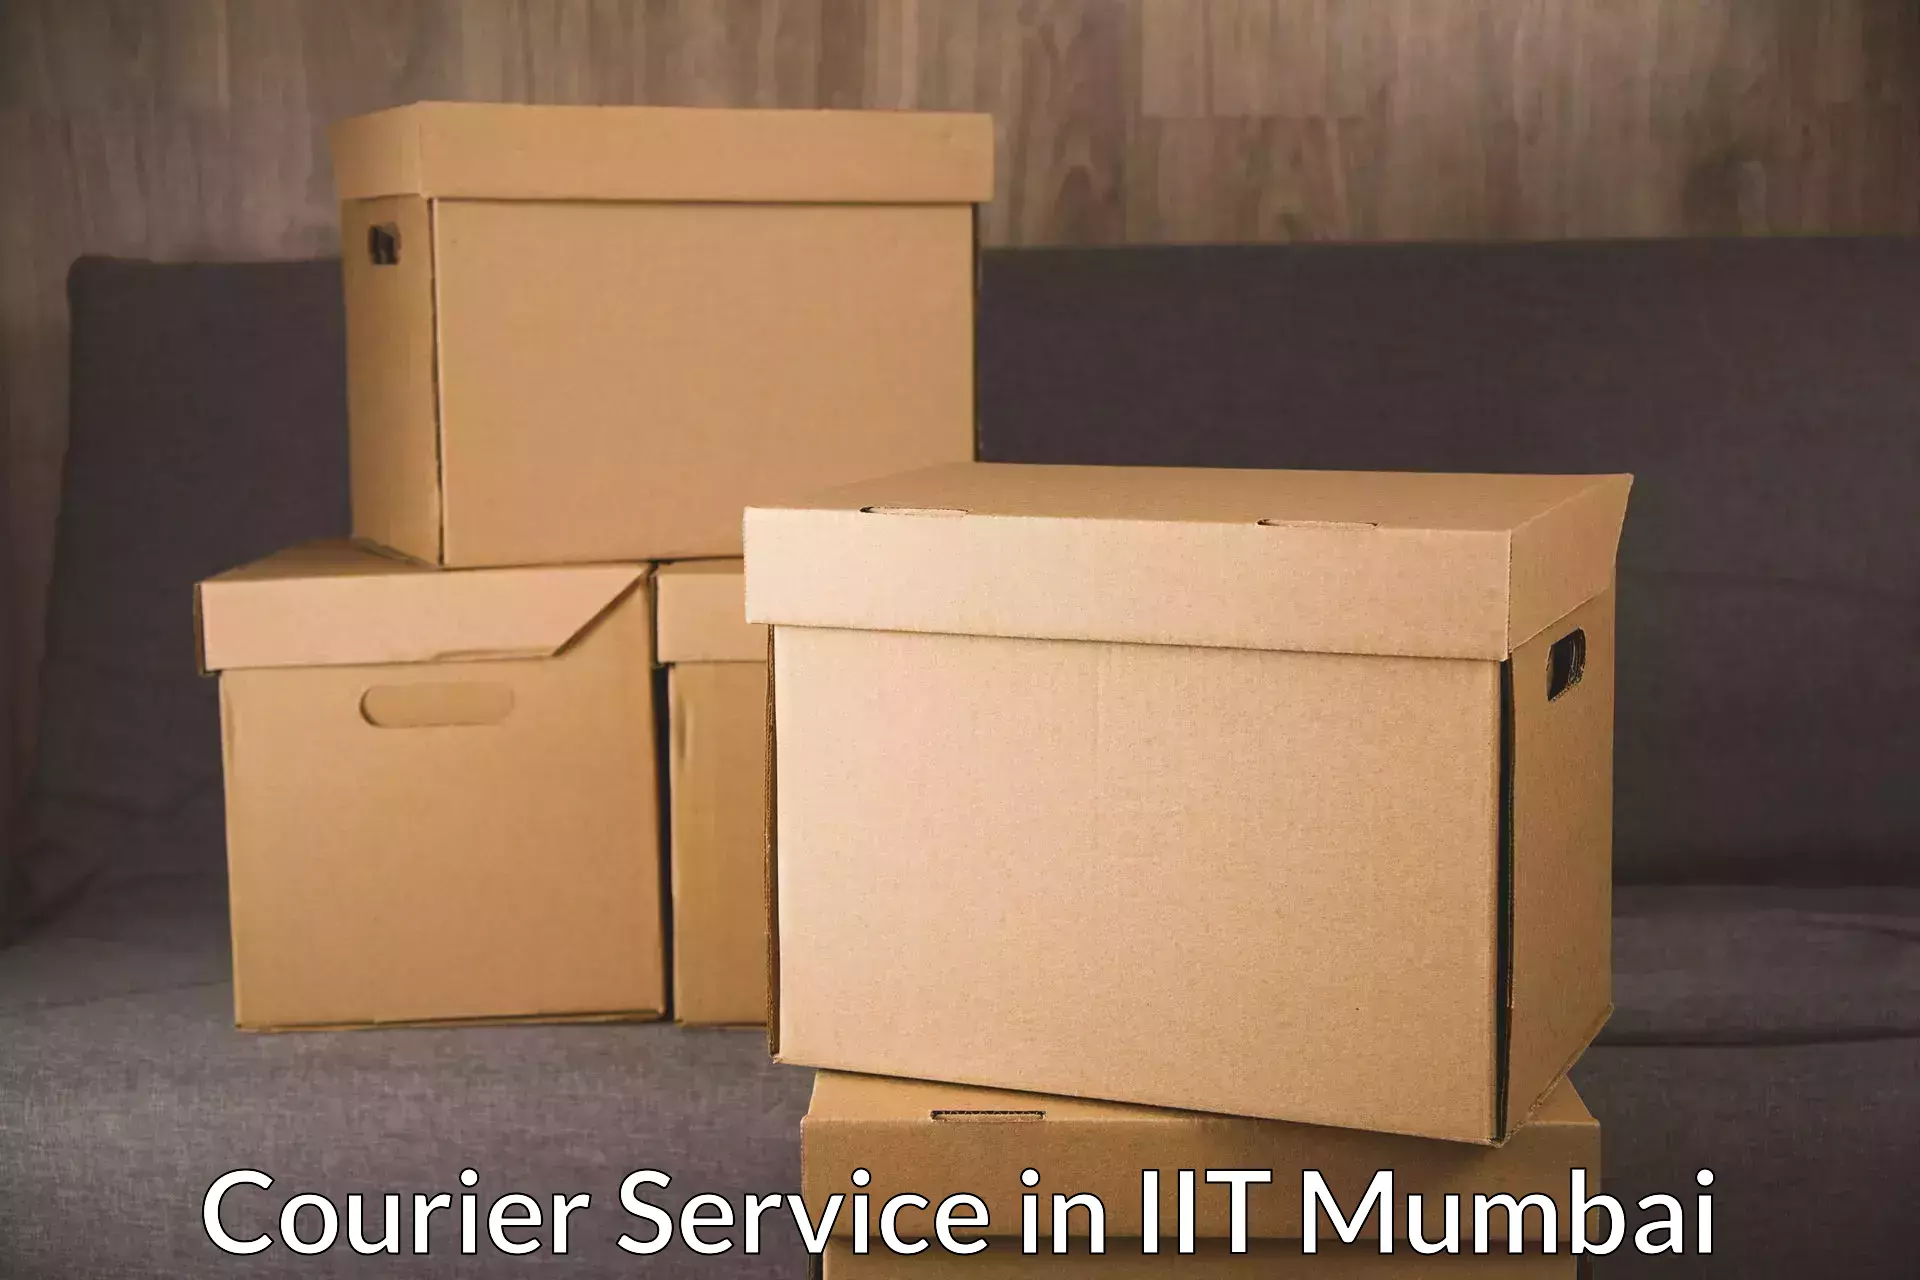 International parcel service in IIT Mumbai